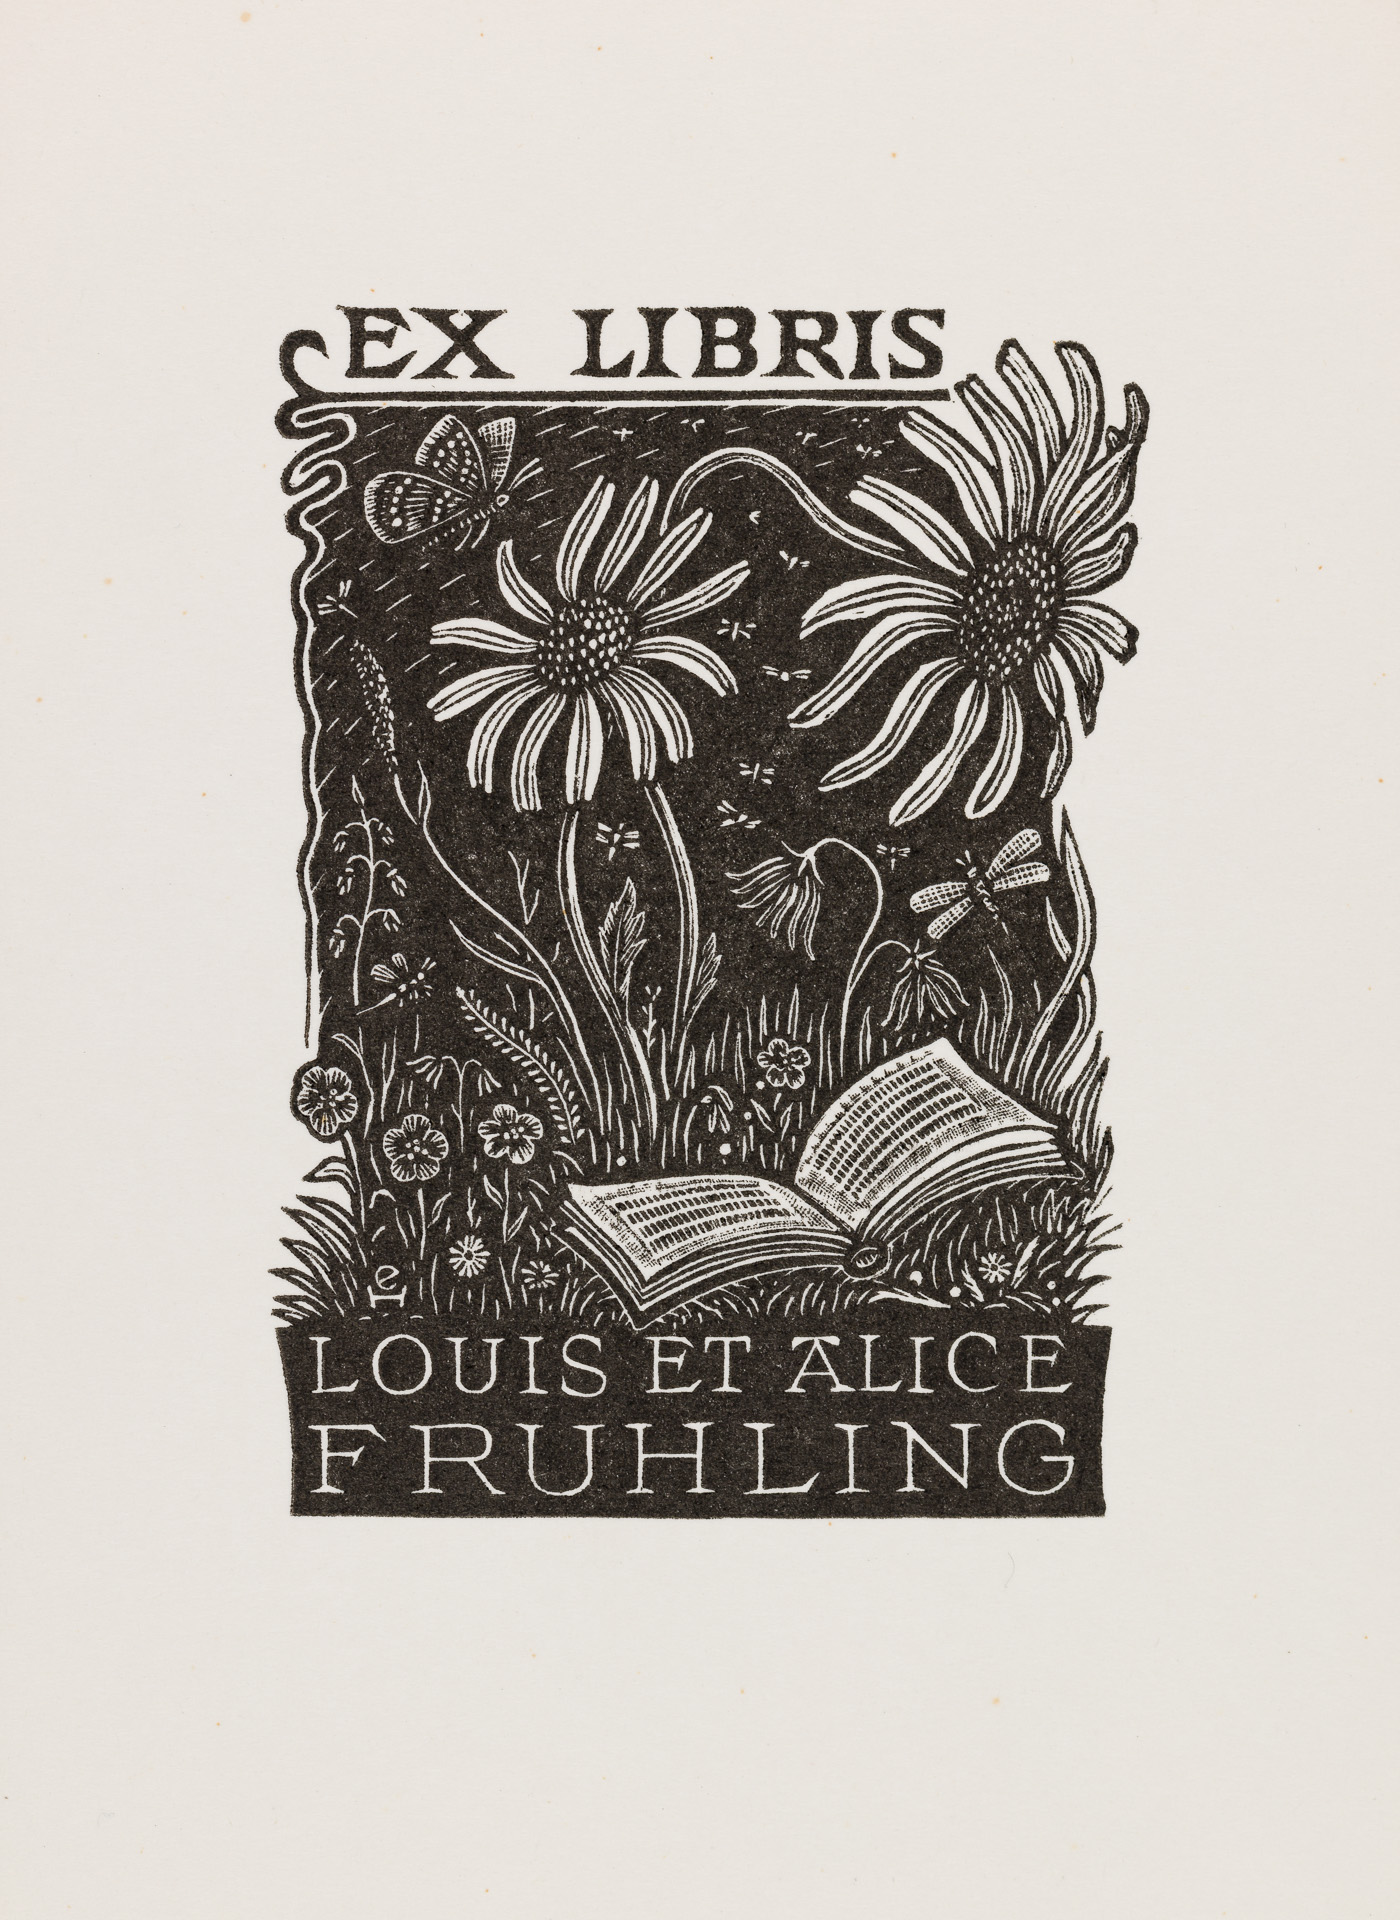 Exlibris Louis et Alice Fruhling